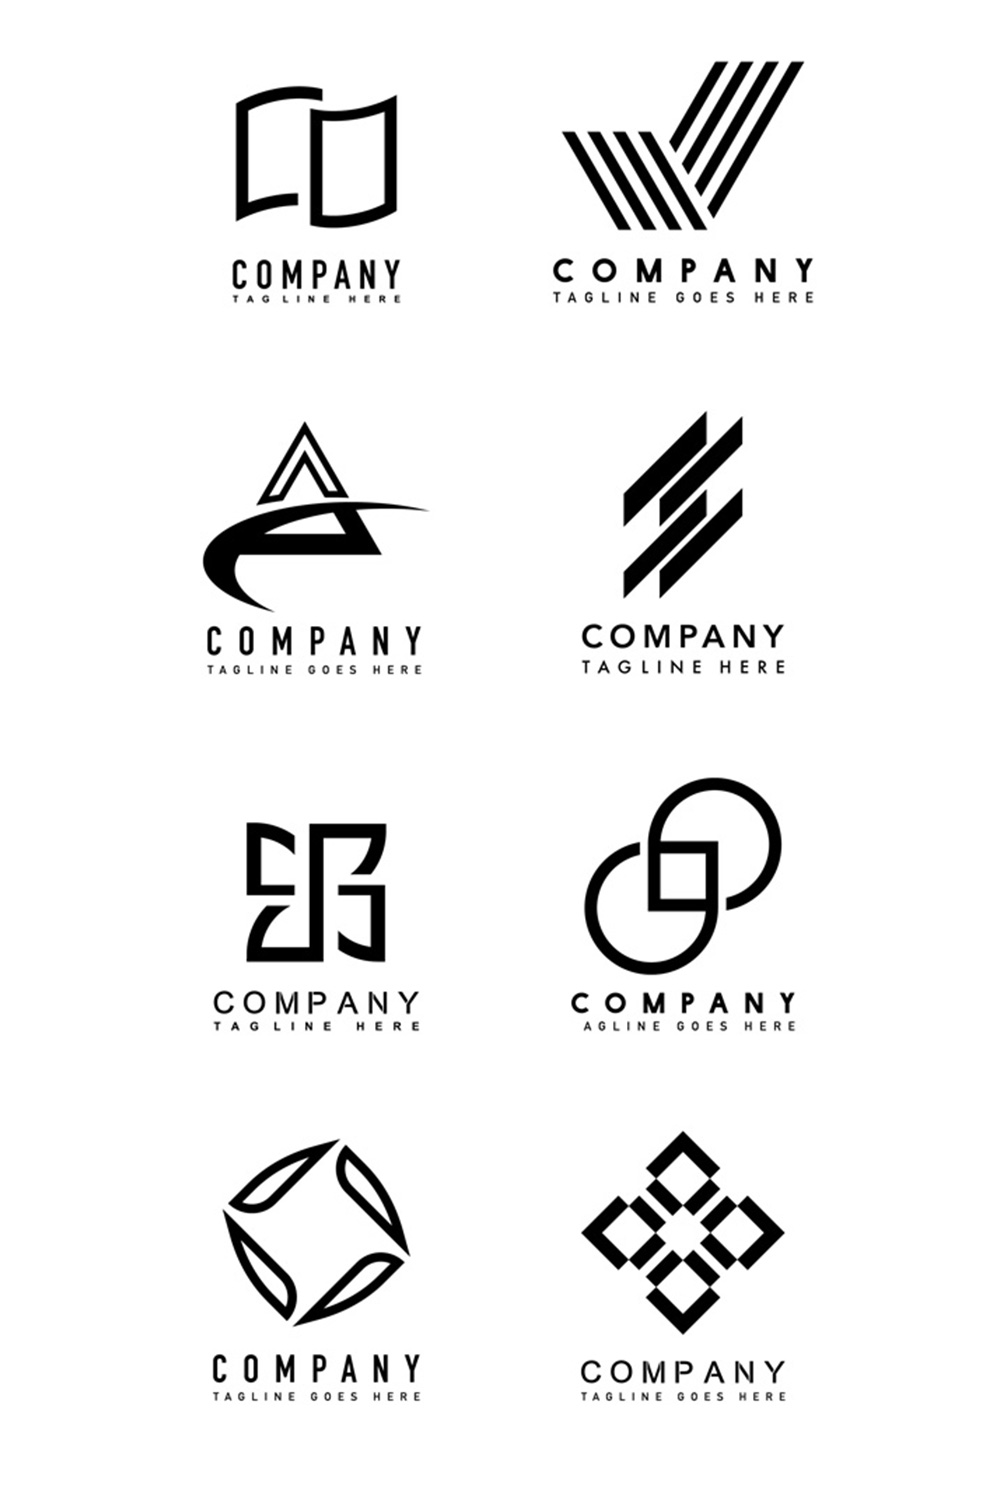 Adventure Company Logo pinterest.